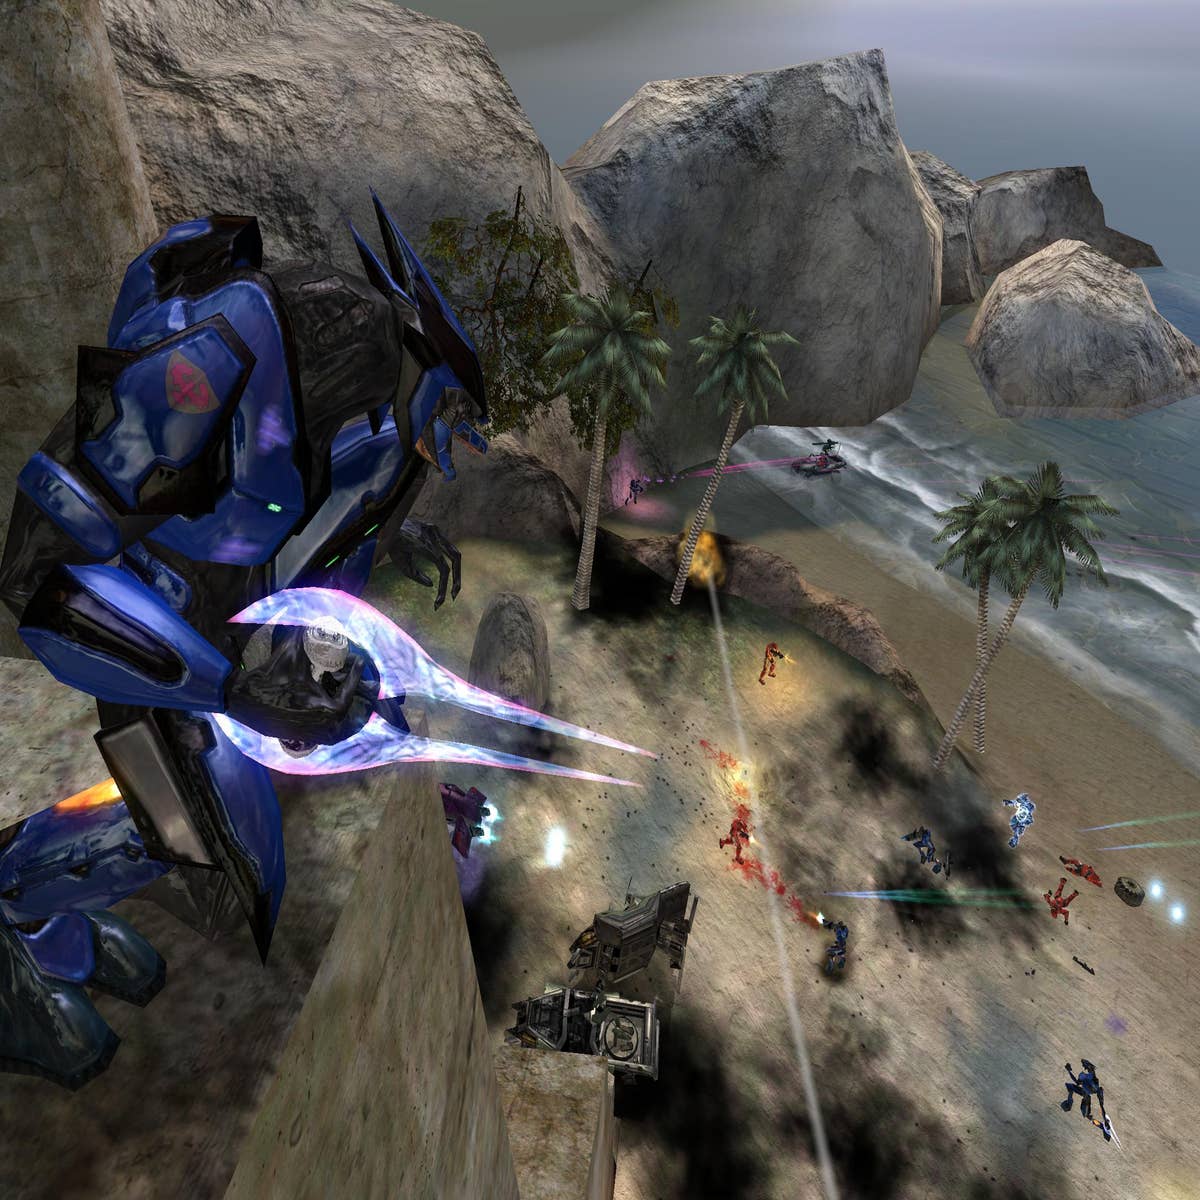 Halo modder turns the Xbox Series X into a devastating rocket